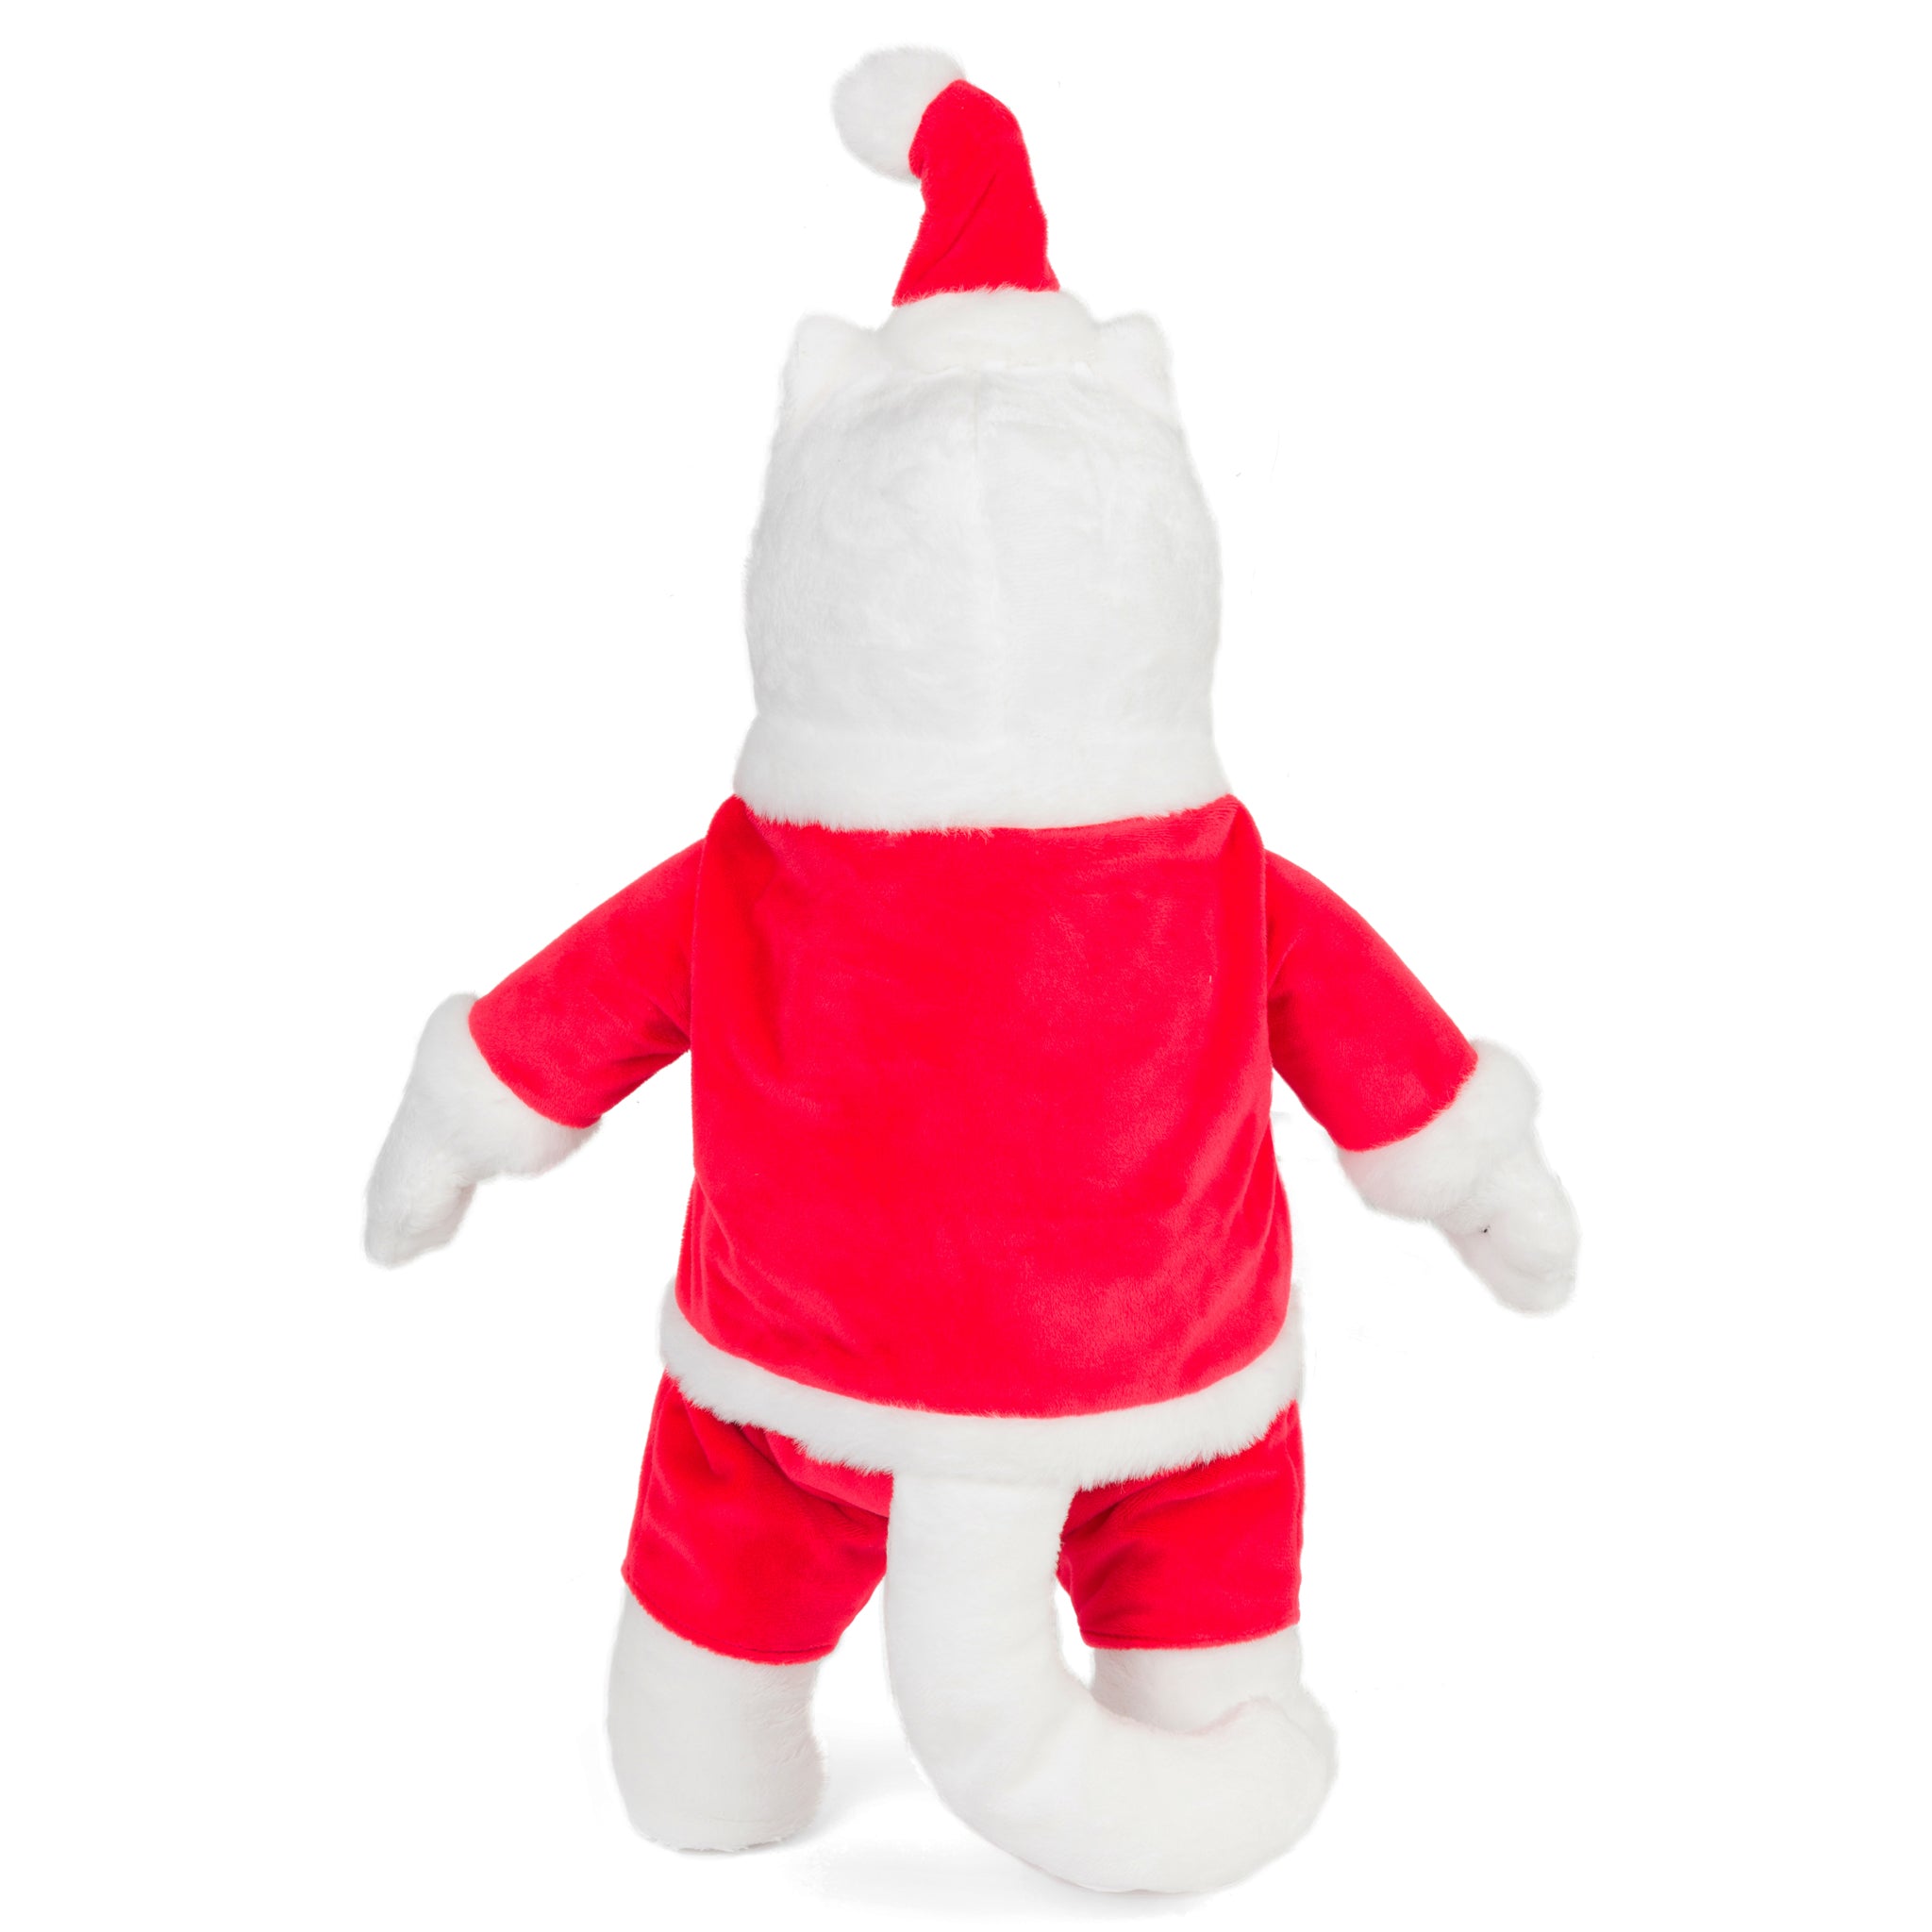 Lord Santa Plush Toy (Red)